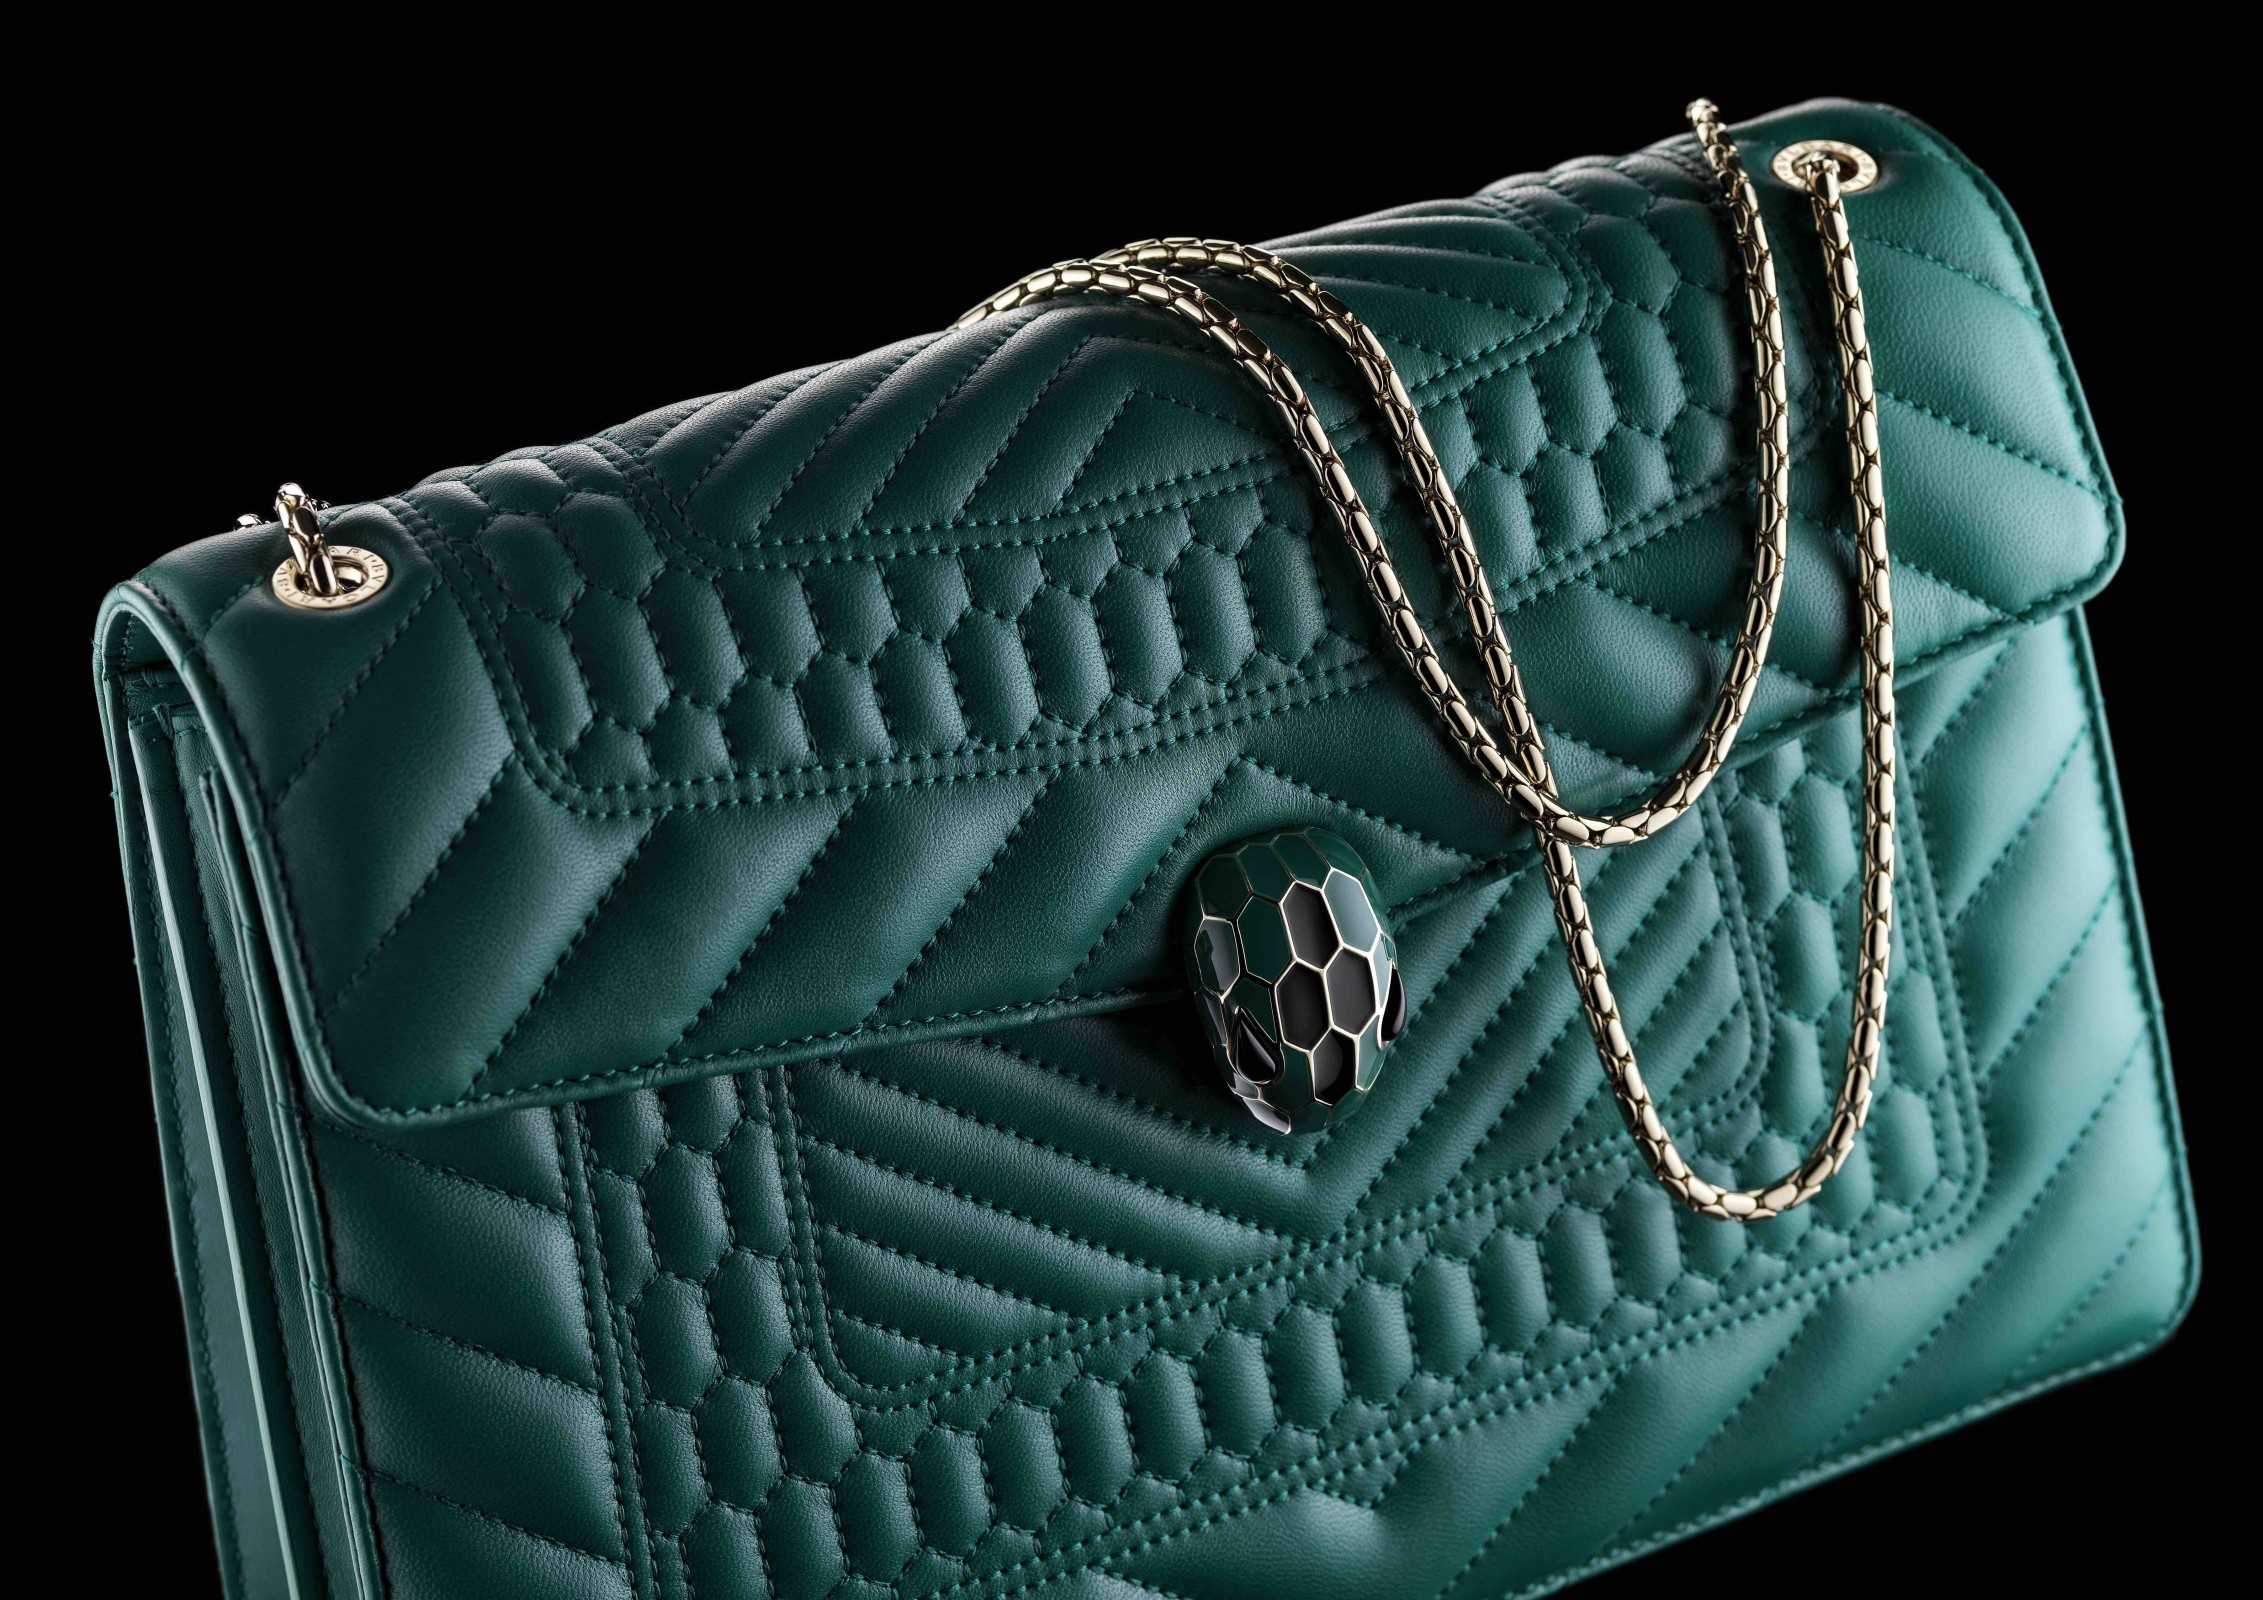 Accessory of the Week: Bulgari’s Exclusive Emerald Bag